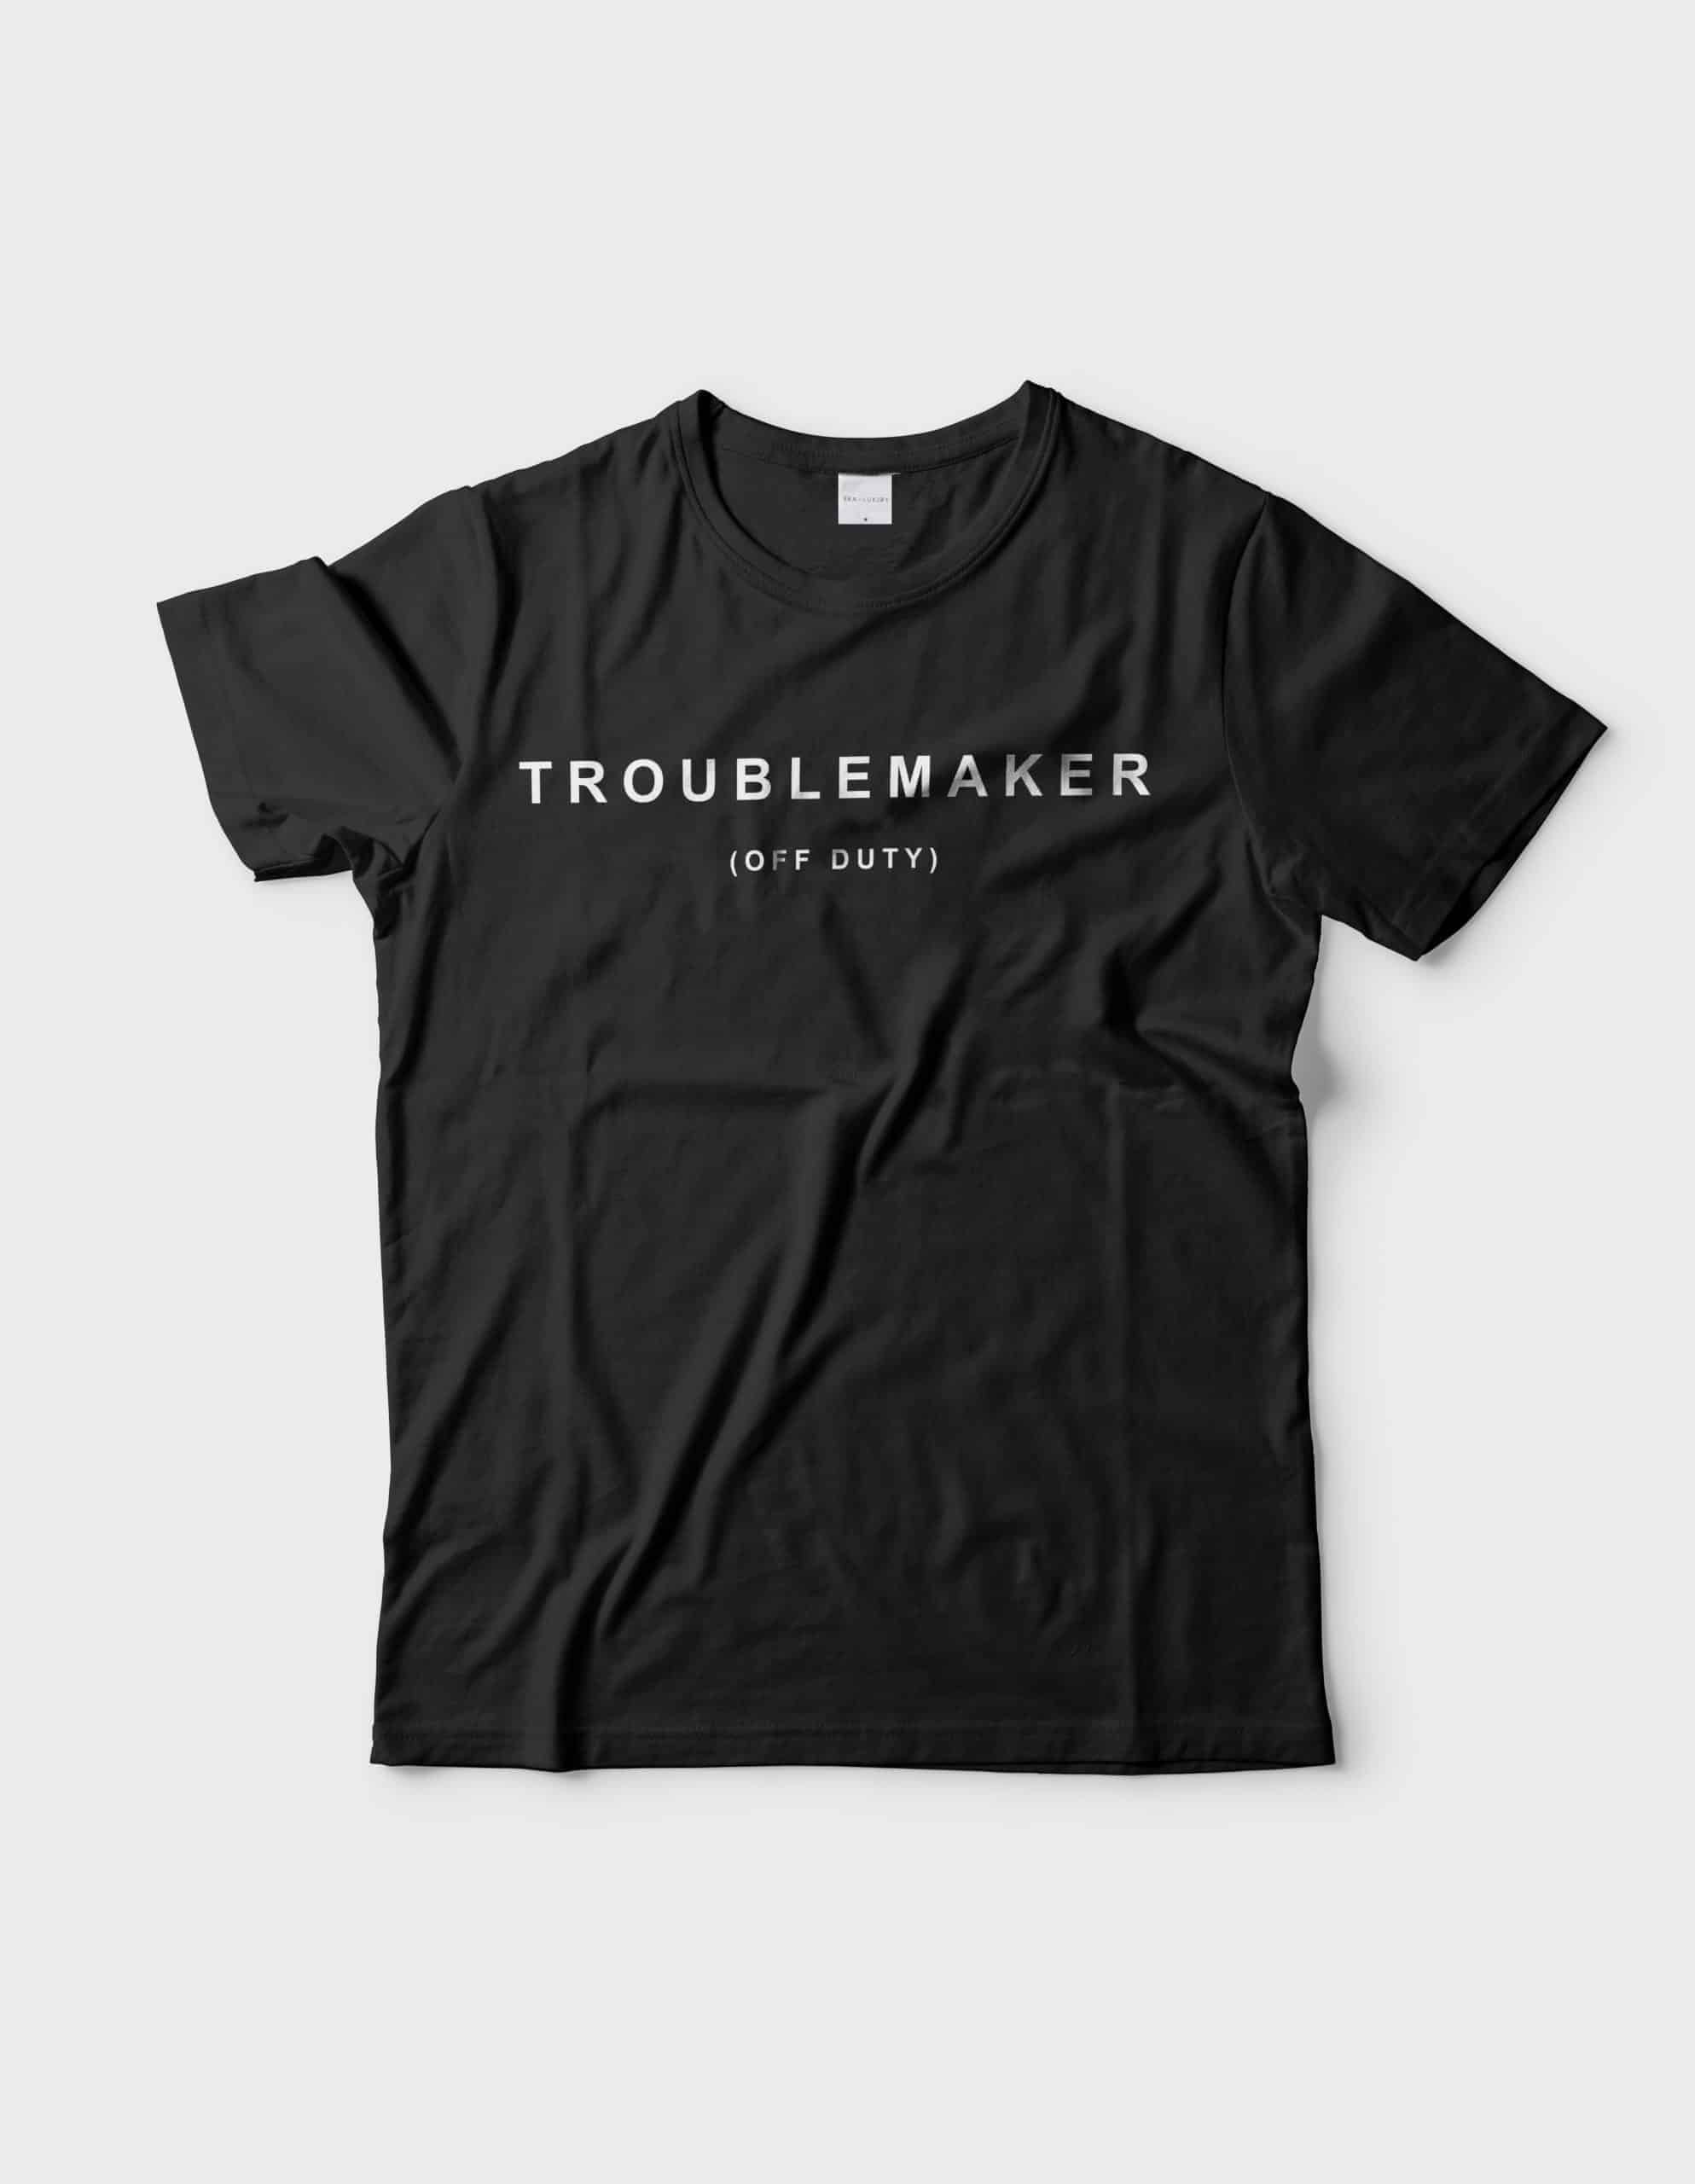 Troublemaker Graphic Tee